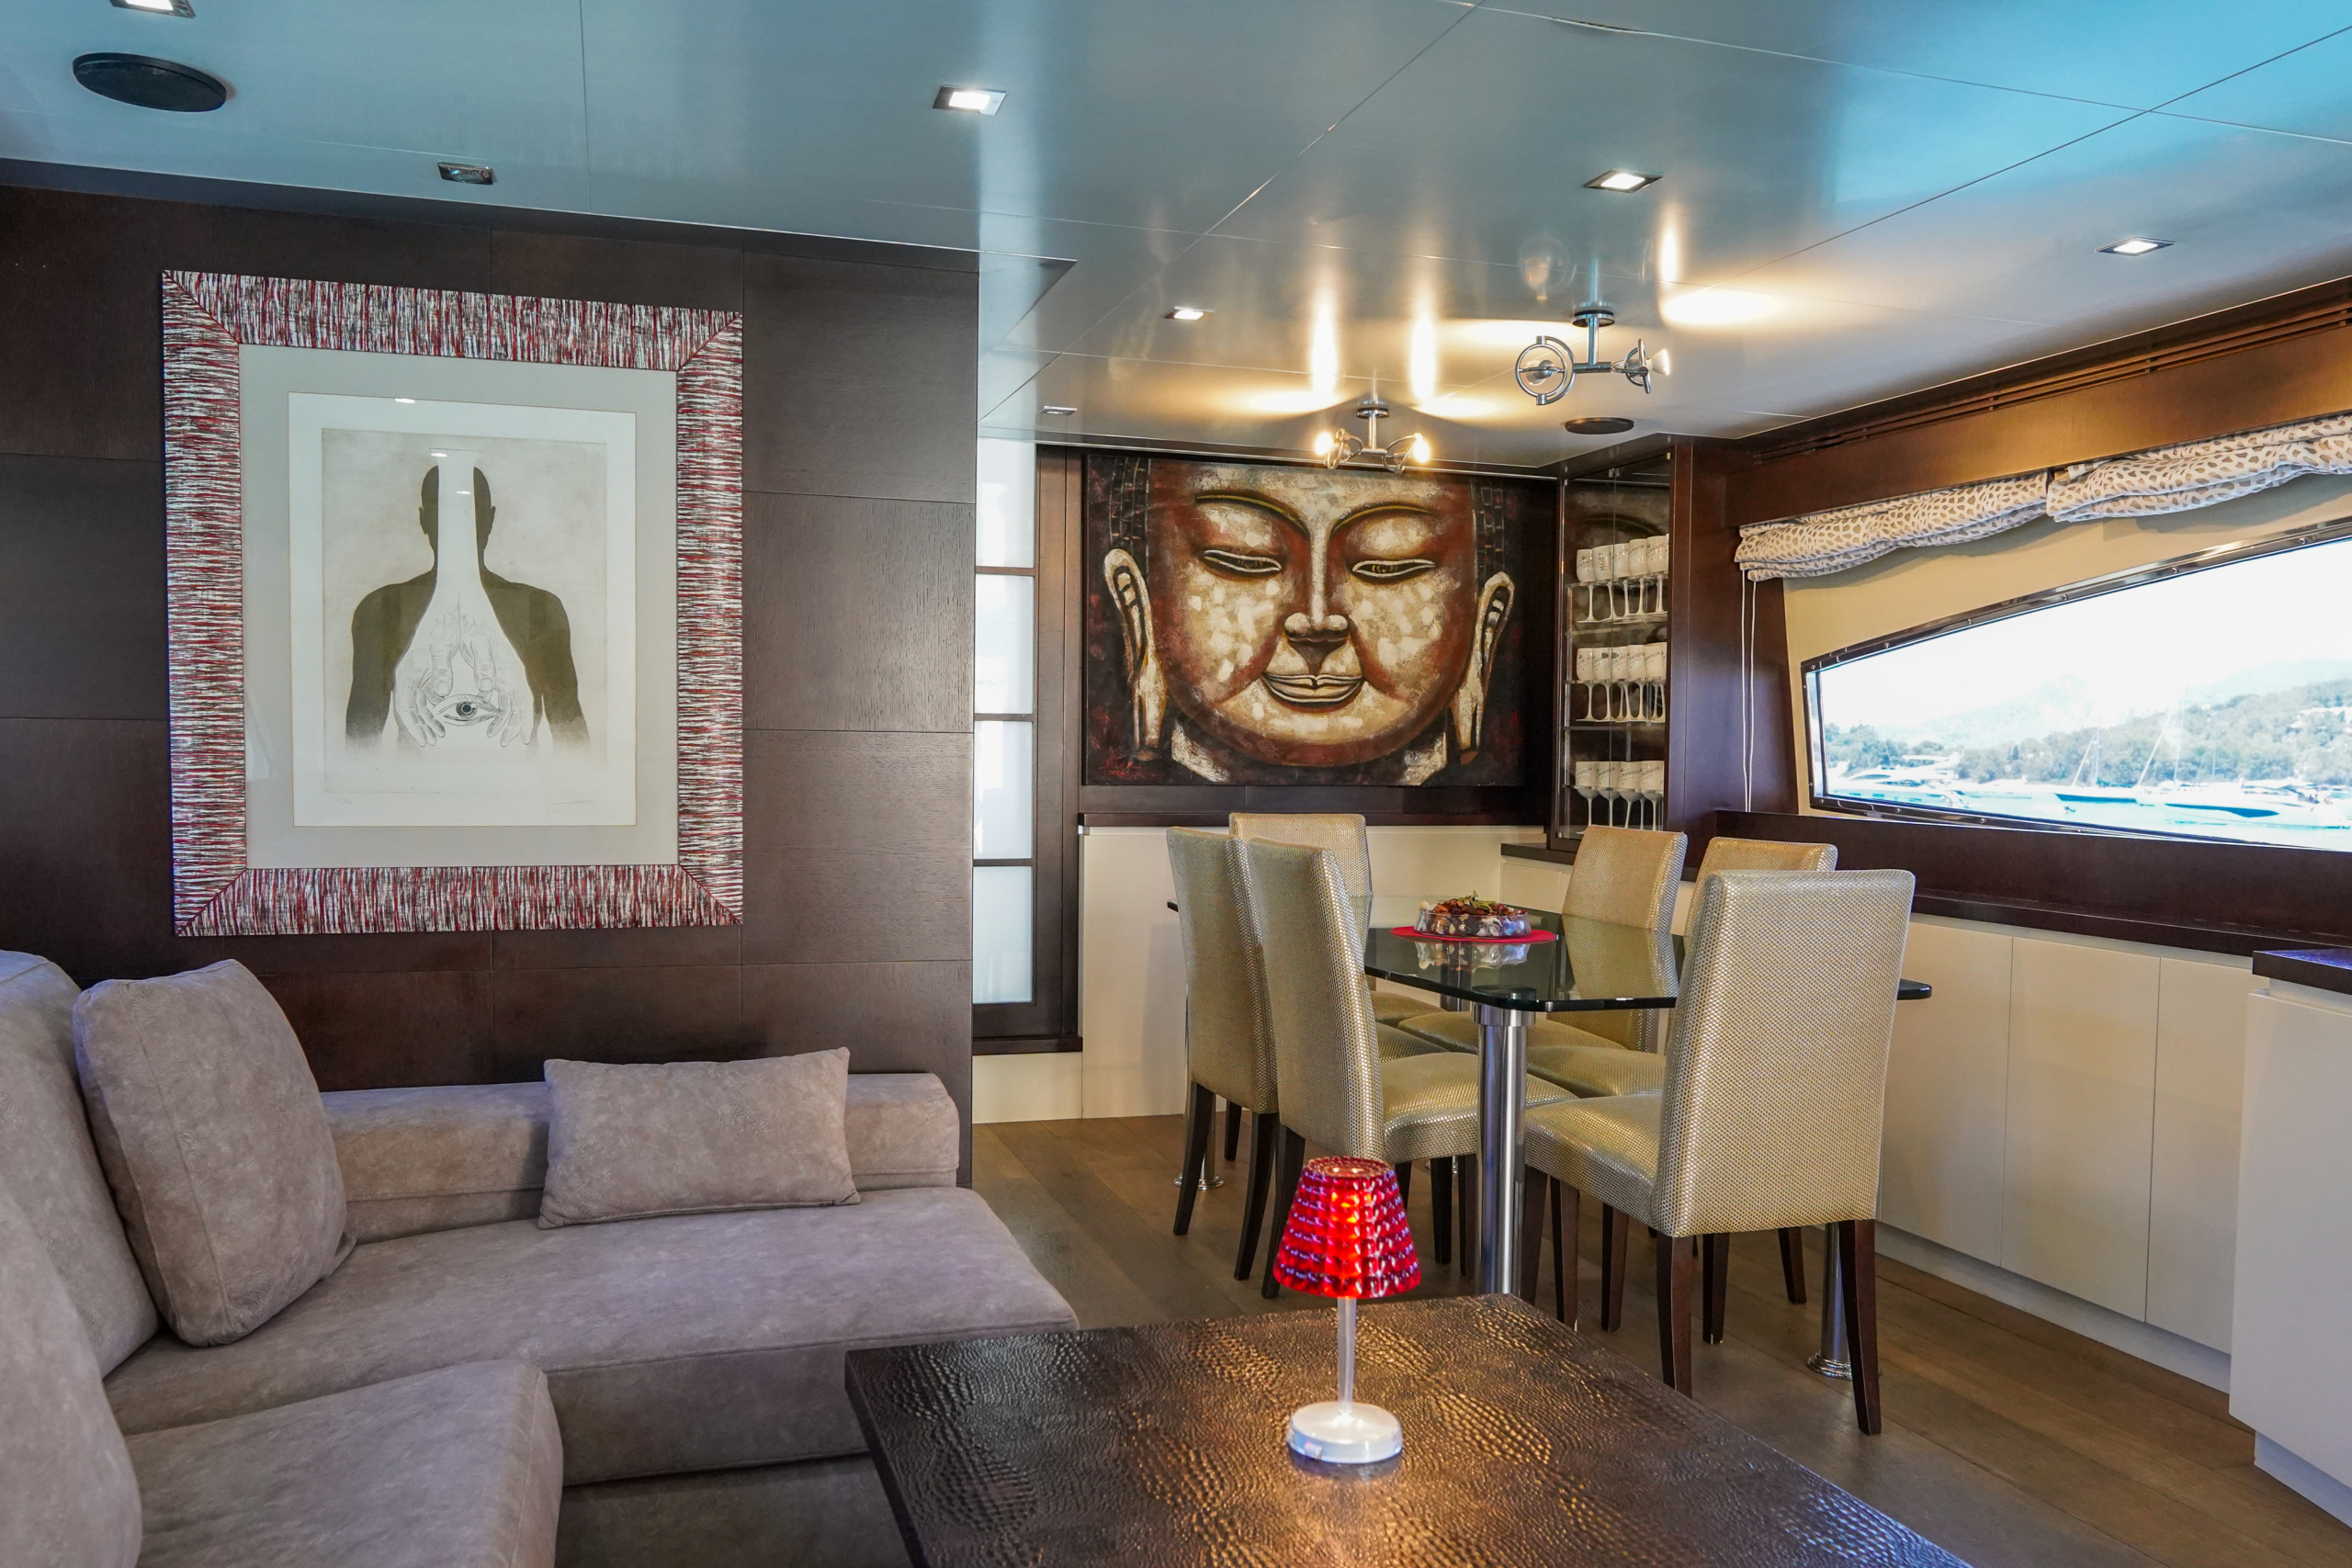 Geminis-Astondoa-Yacht-For-Charter-Salon-Dining-Area